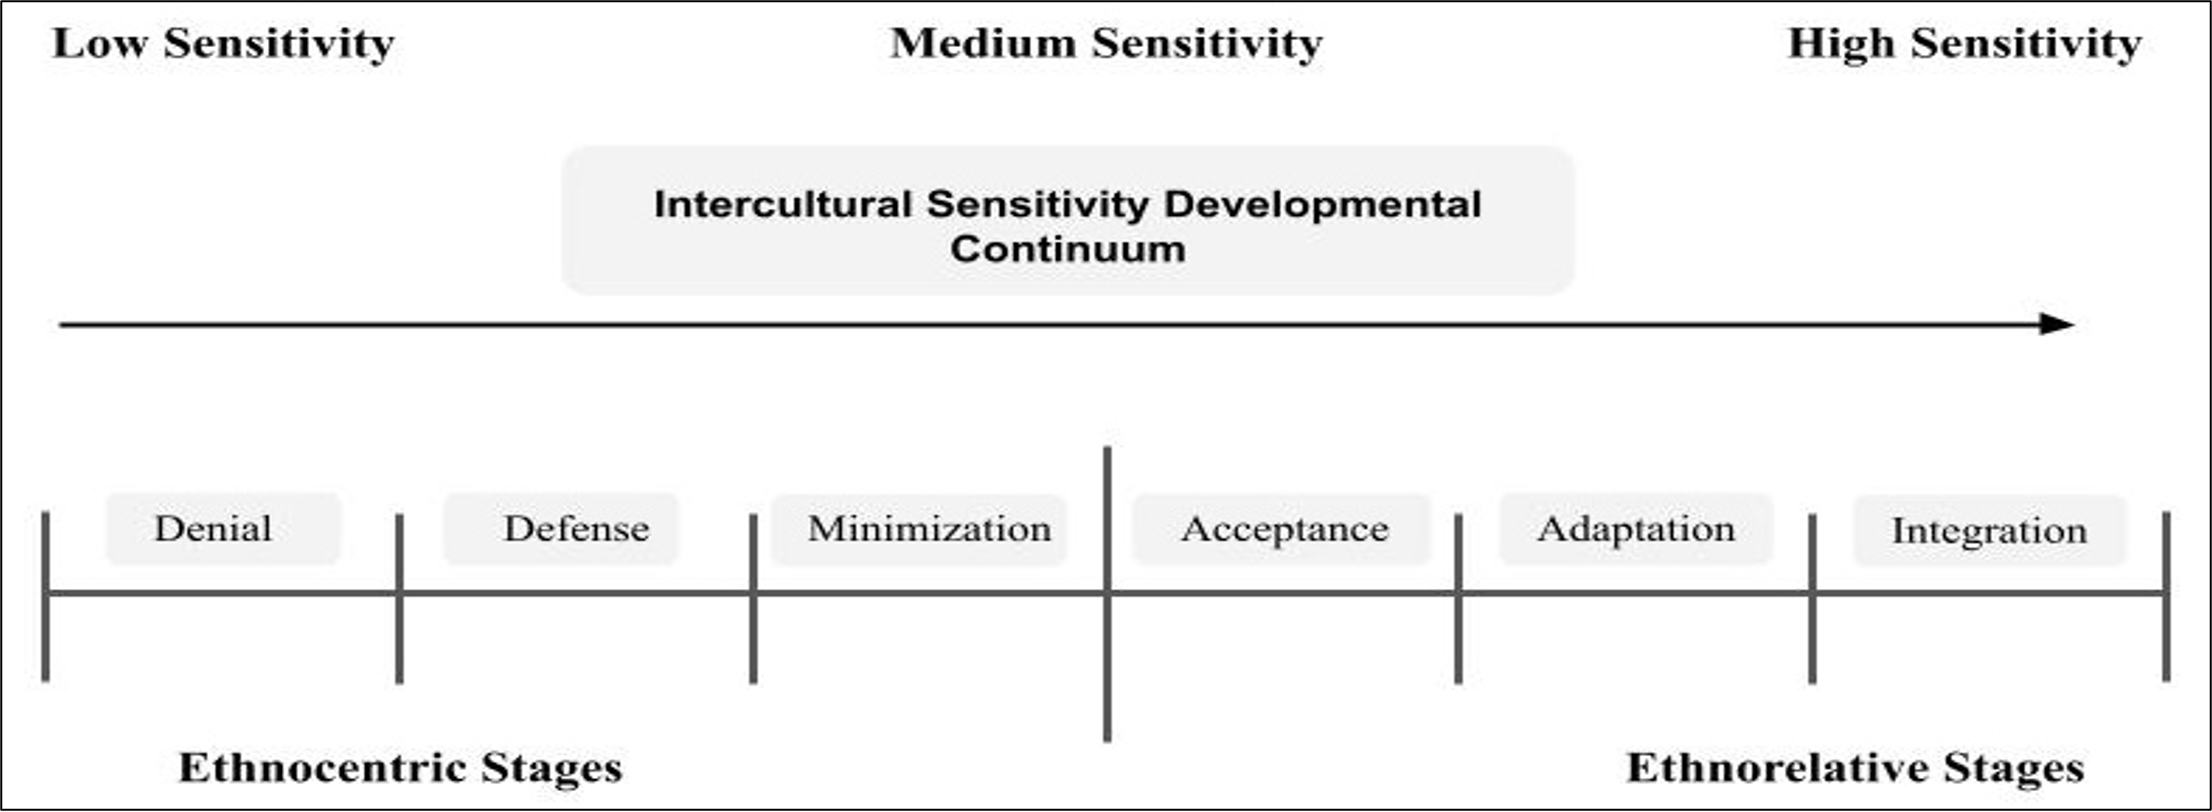 Intercultural Sensitivity Development